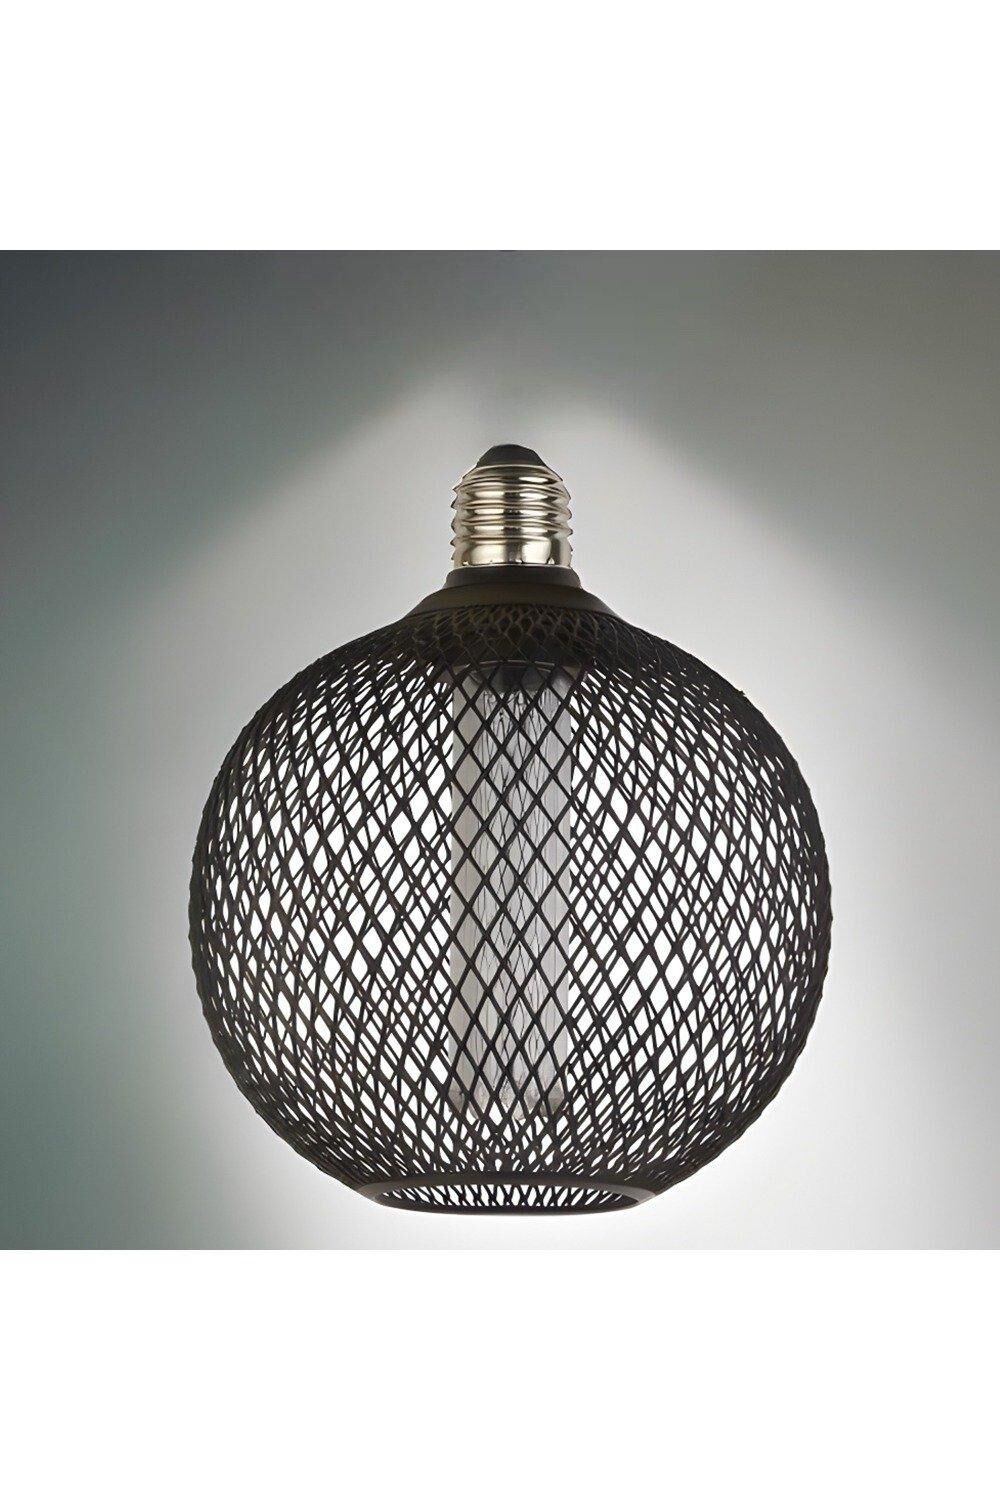 CGC Lighting Decorative Black Mesh Dimmable LED Bulb 1800K Ultra Warm Round Globe